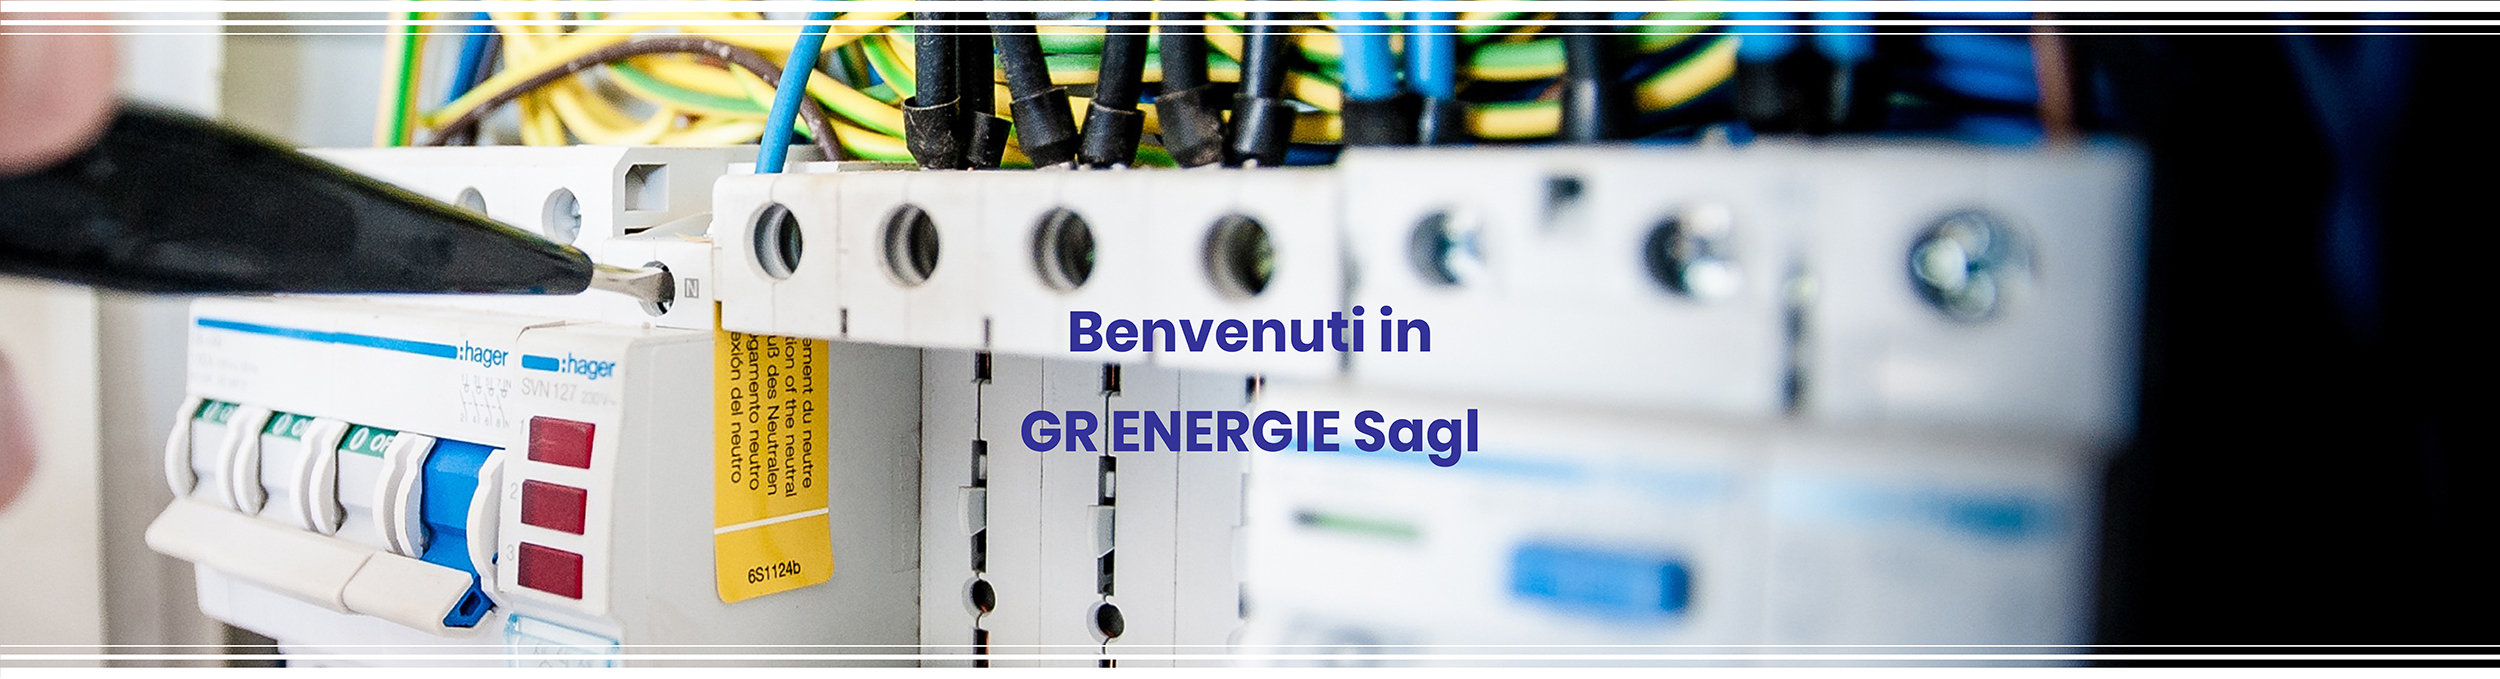 Benvenuti in GR Energie Sagl